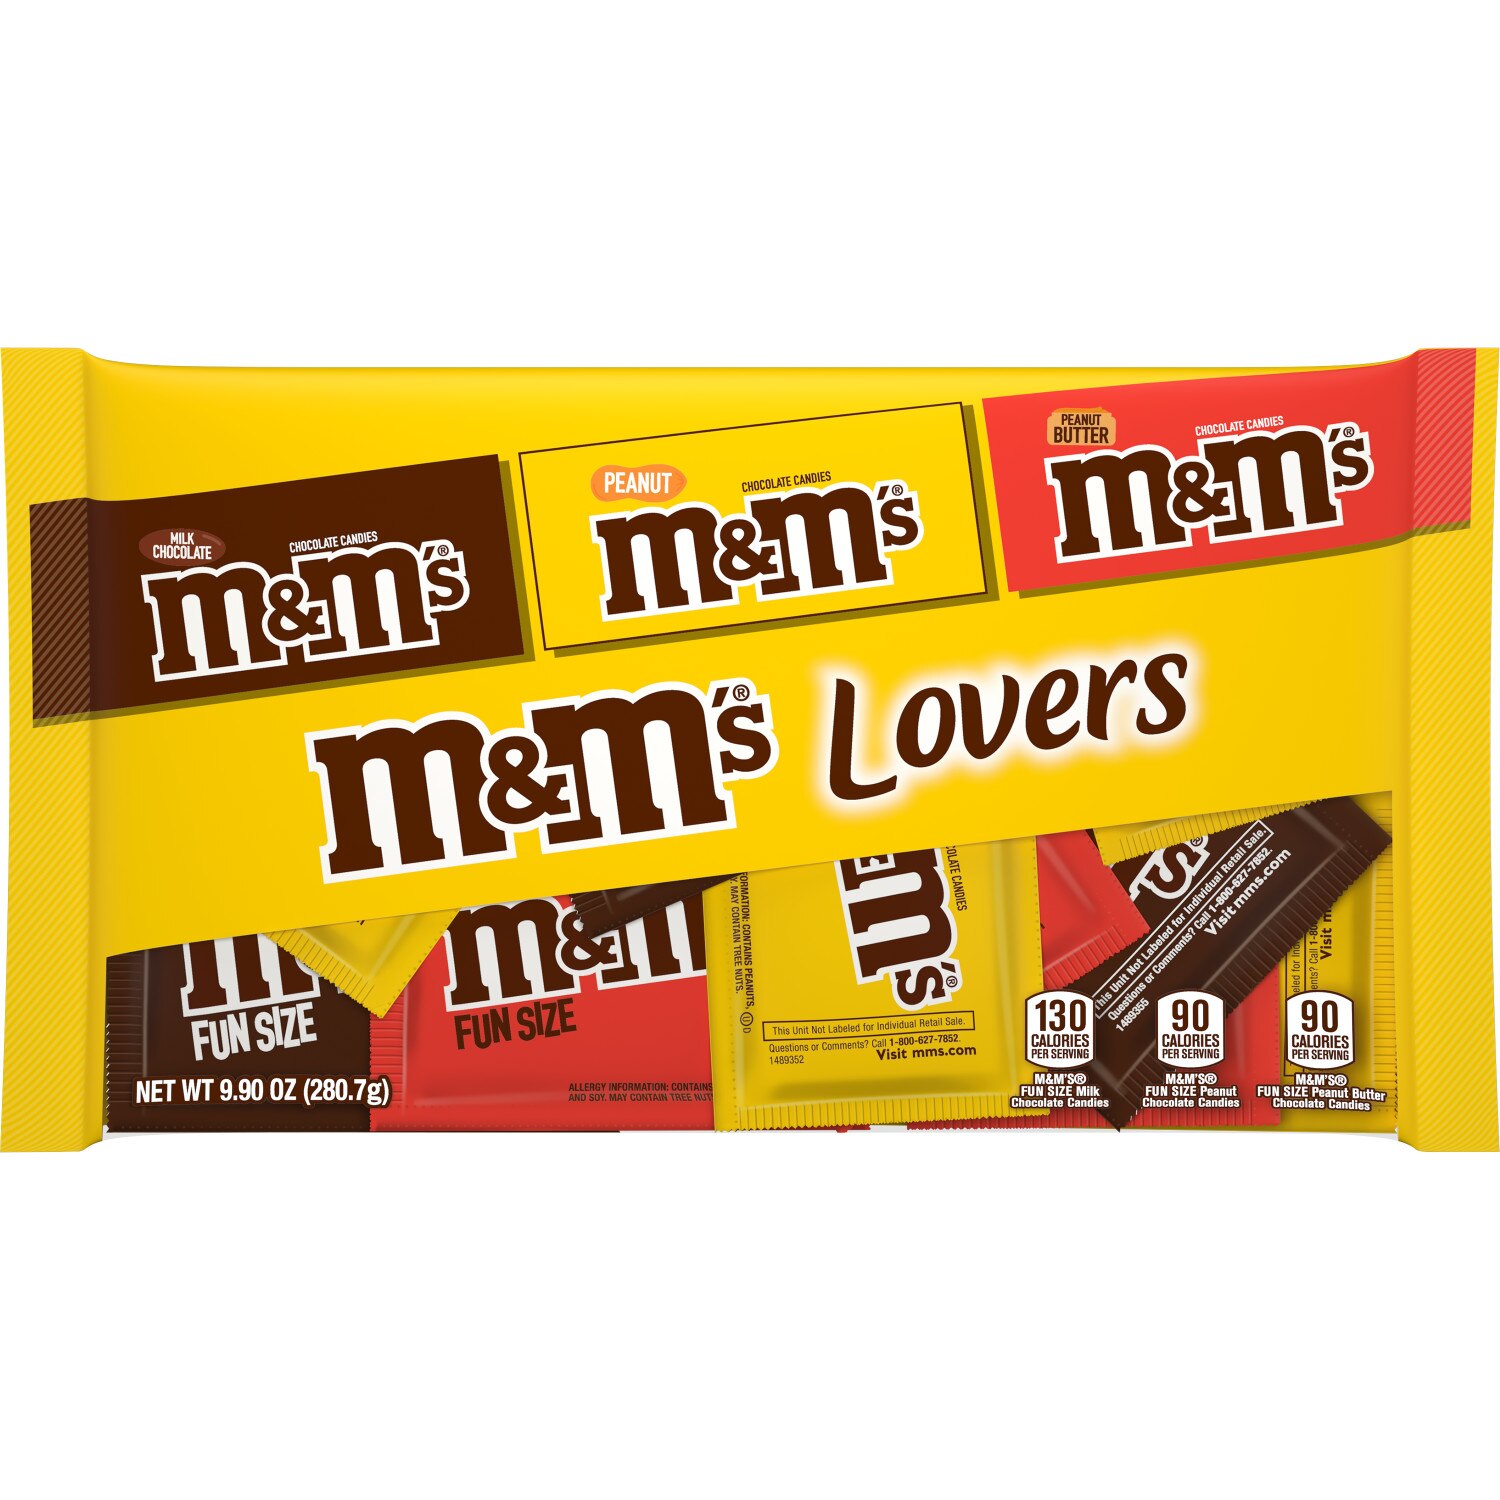 M&M'S Milk Chocolate, Peanut, and Peanut Butter Fun Size Halloween Candy Assortment, 9.9 oz